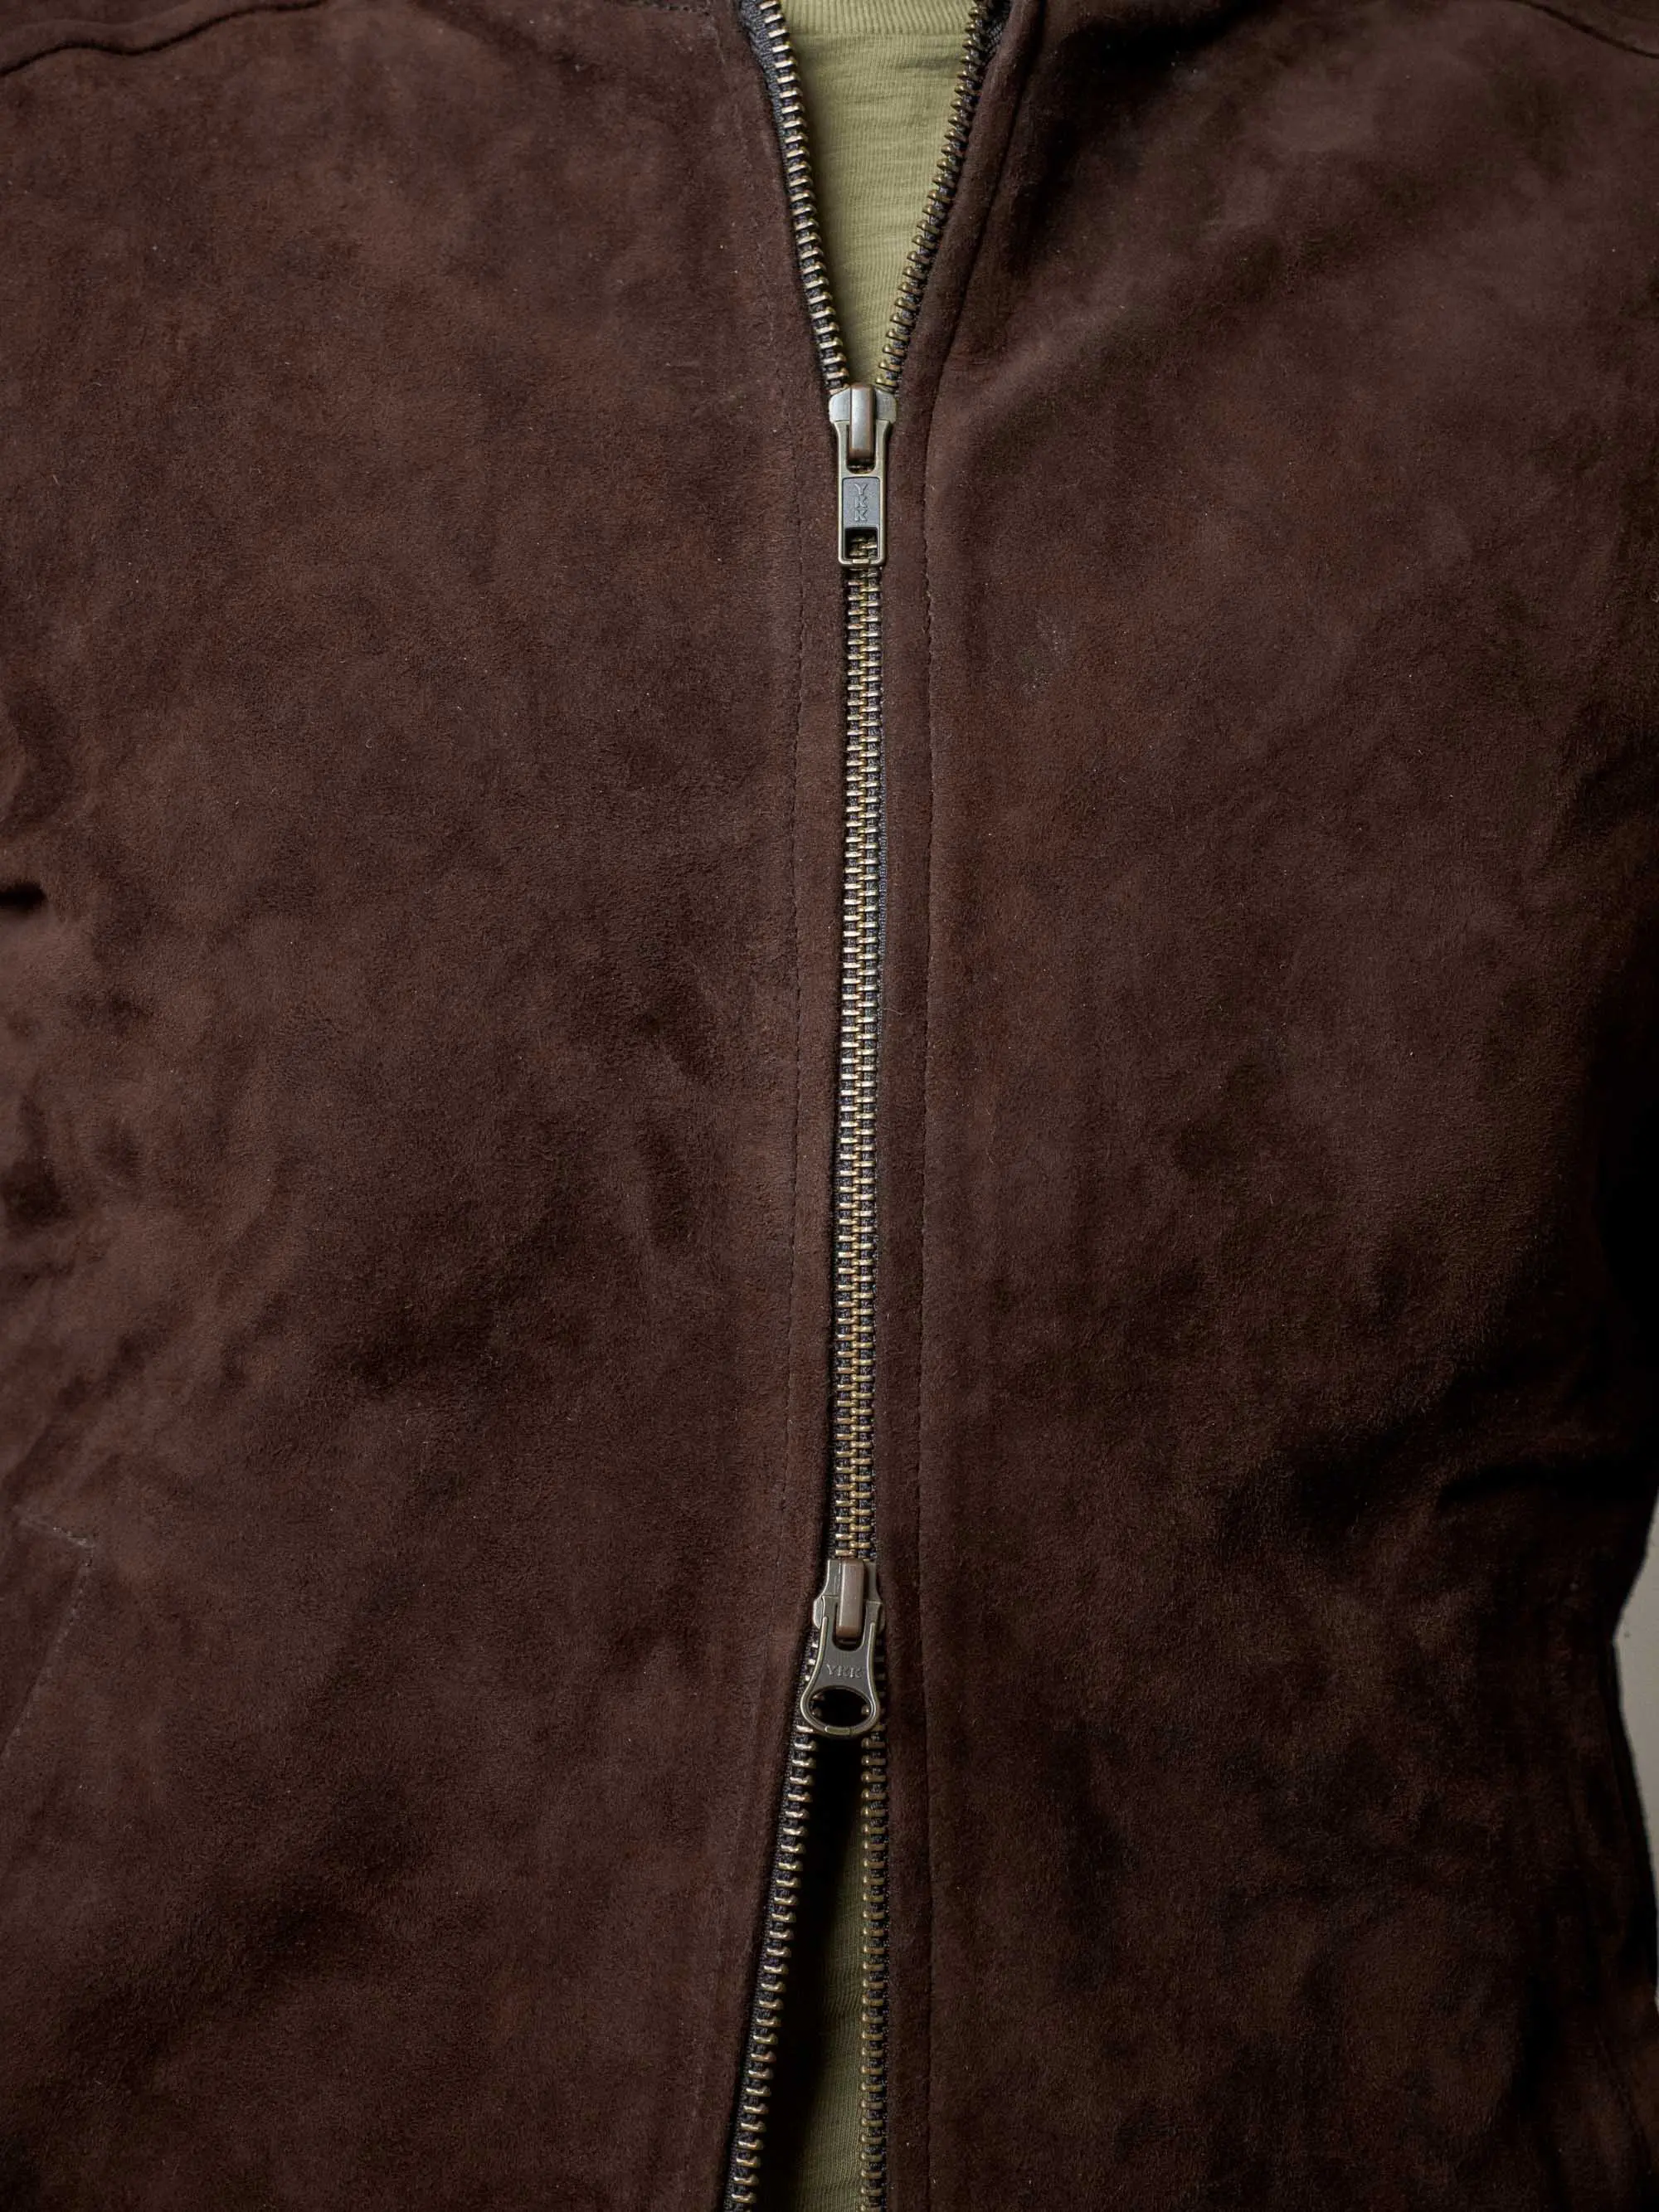 Jacket double zipper